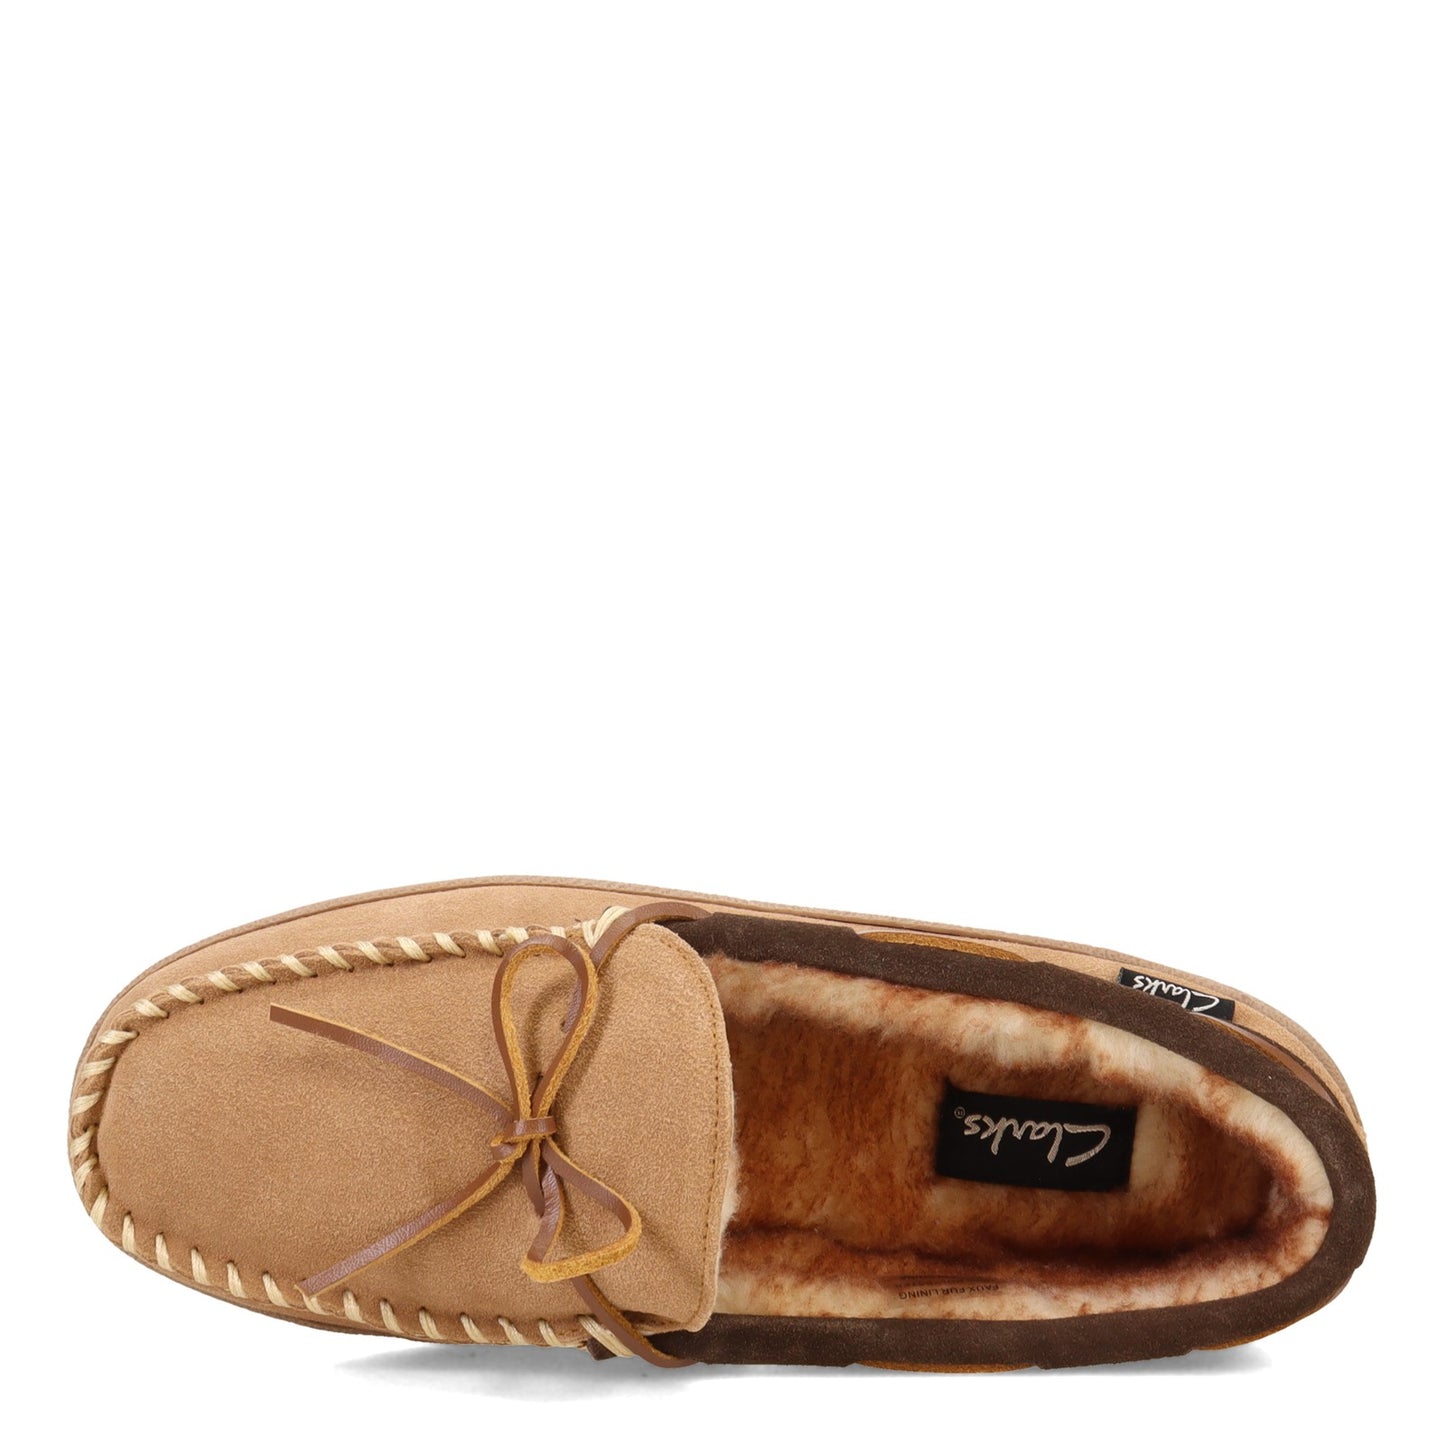 Peltz Shoes  Men's Clarks Moccasin Slipper TAN BROWN 22SH-011-SIM CB